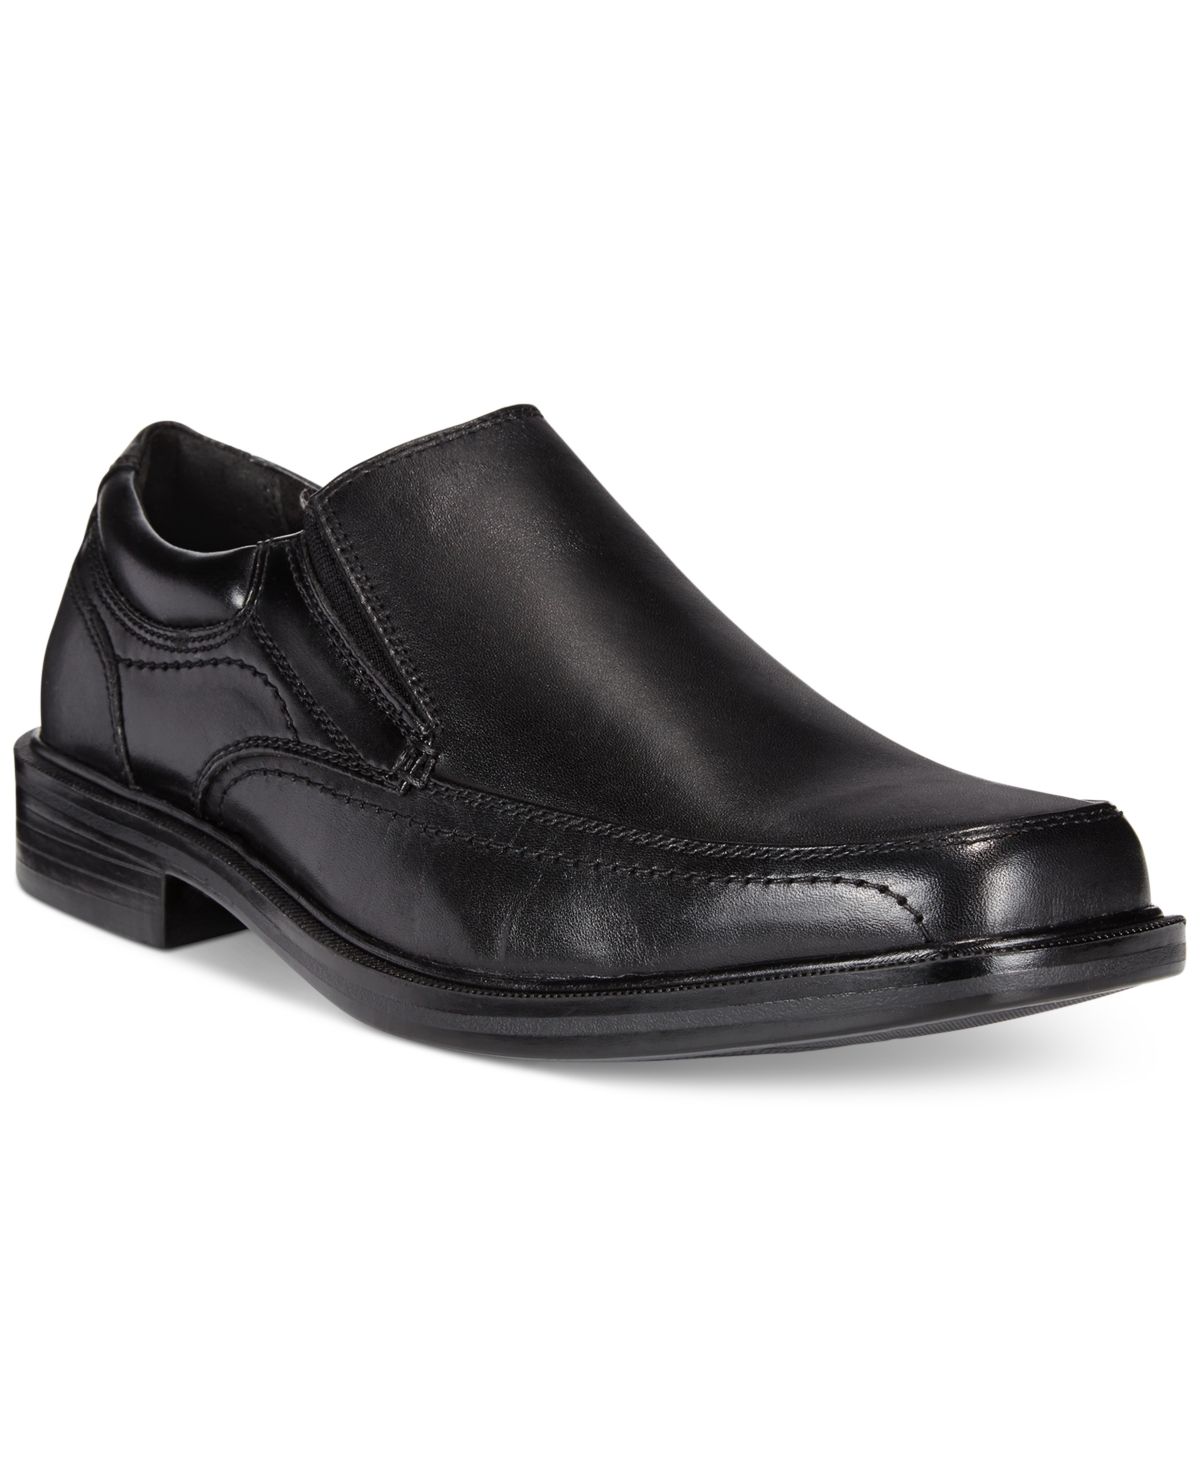 Men's Edson Faux Leather Slip-On Loafers - Black